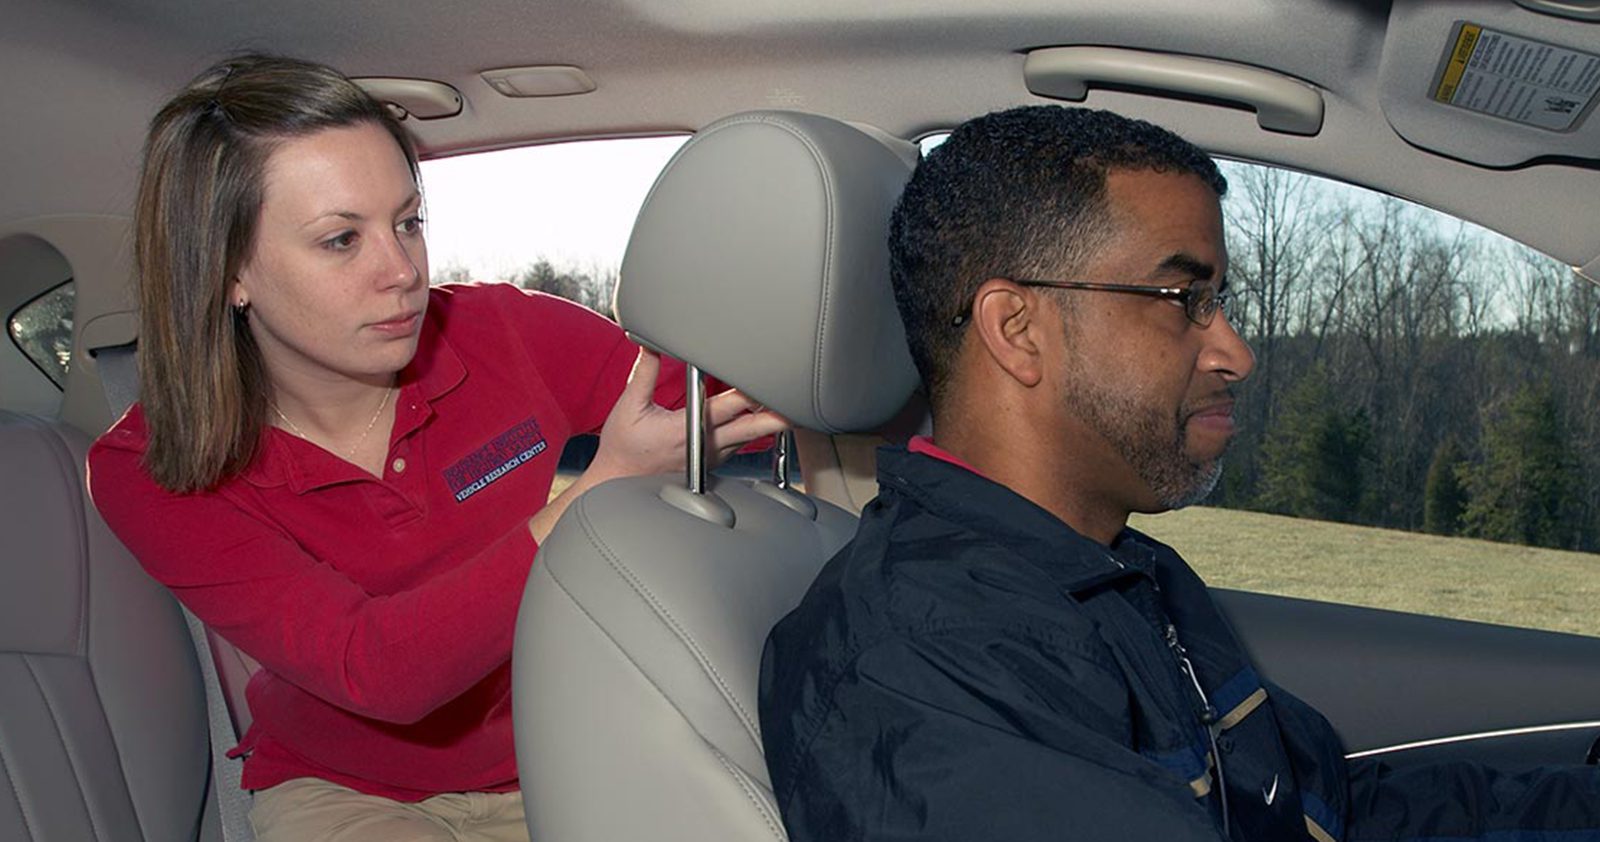 Adjusting seat headrest in a car